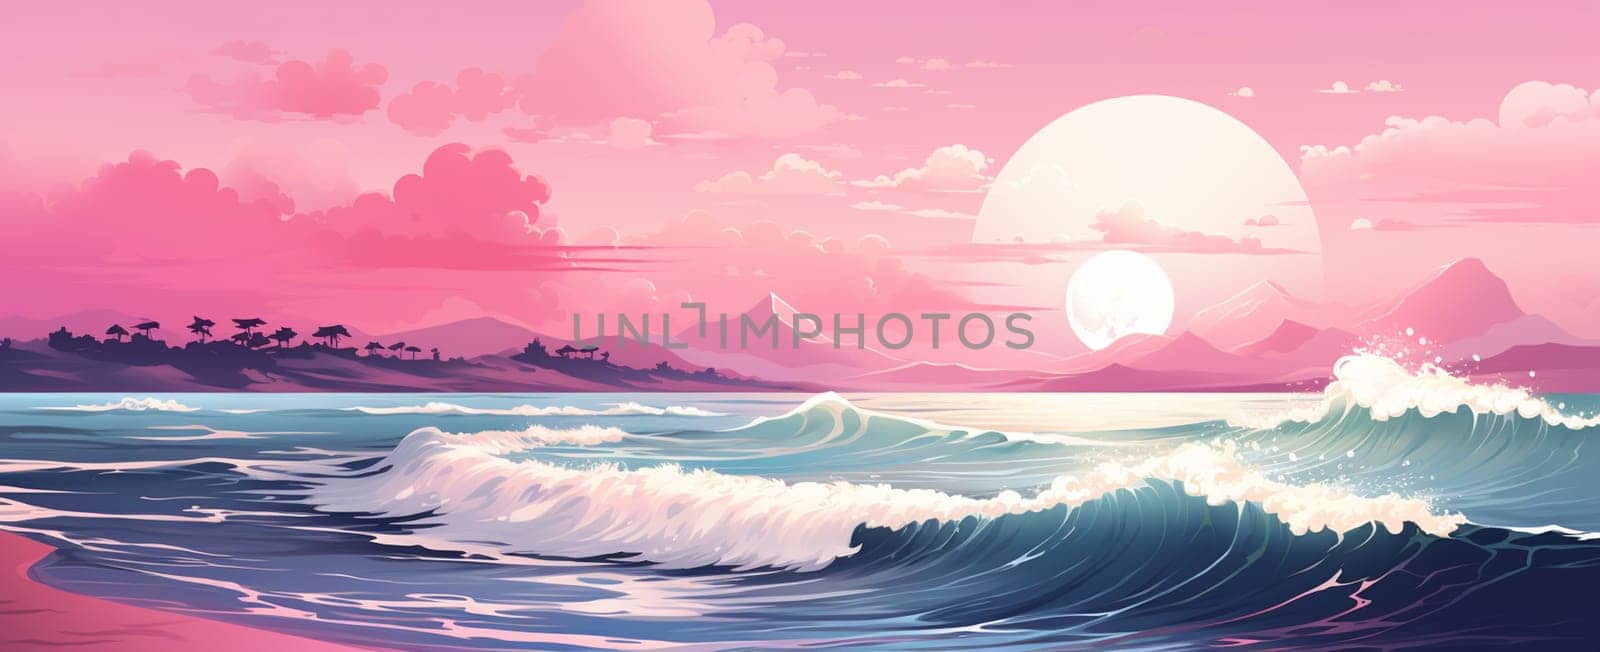 Summer sea sunset landscape flat art illustration, retro vintage poster, cartoon colorful flat illustration. High quality photo